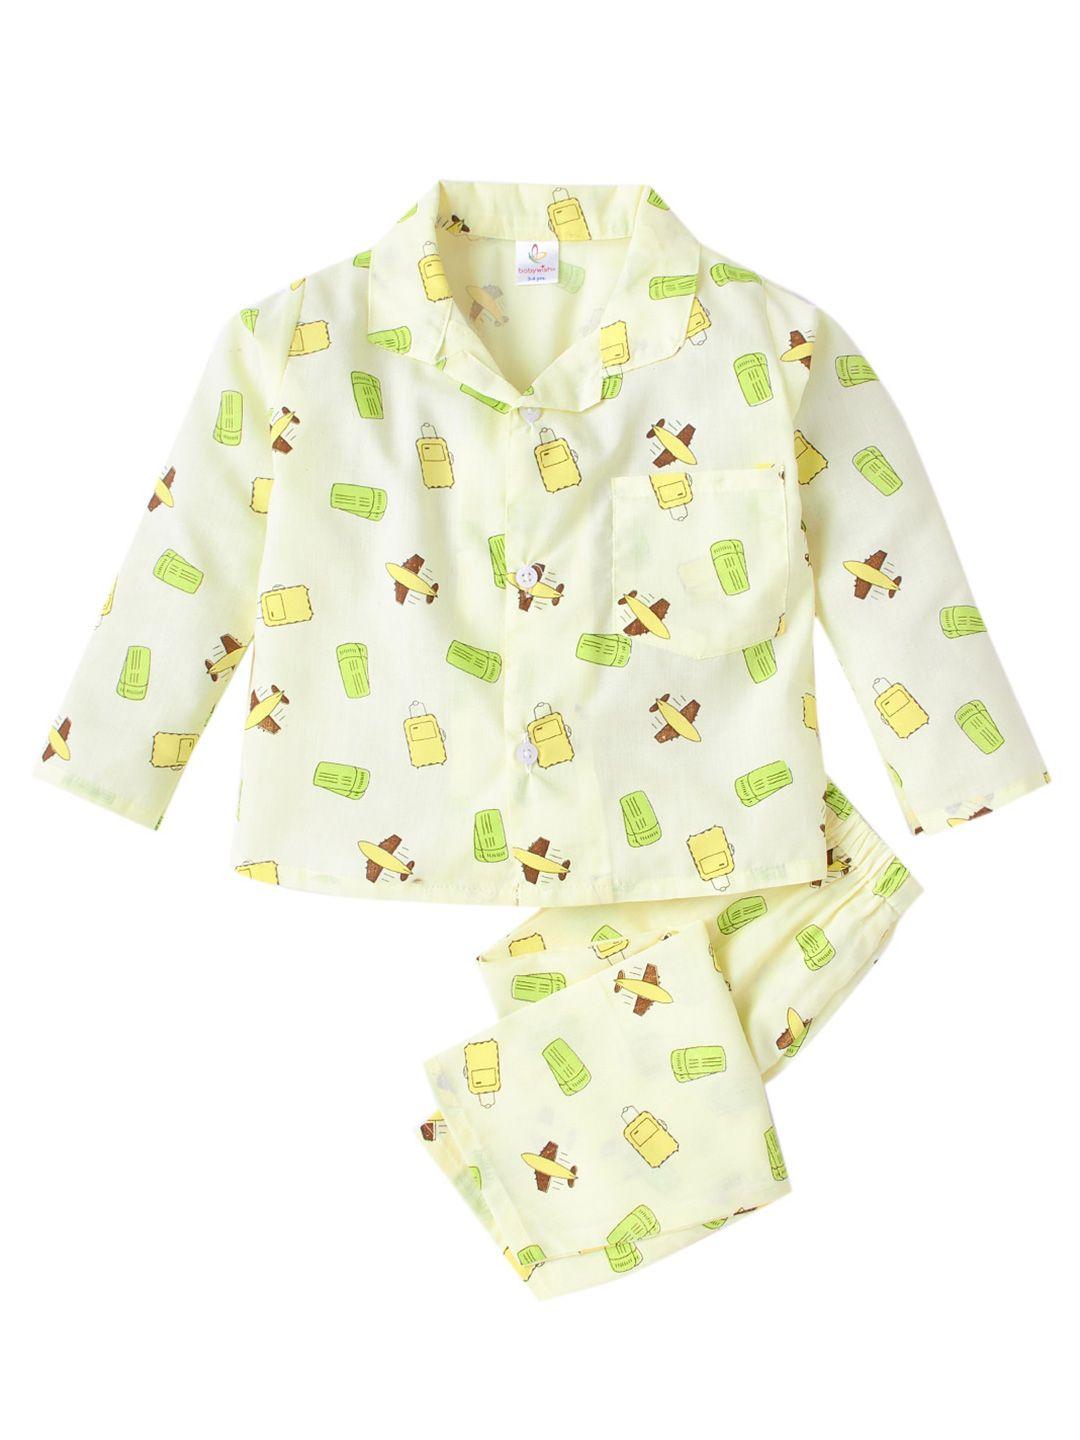 babywish kids printed pure cotton shirt and pyjamas night suit